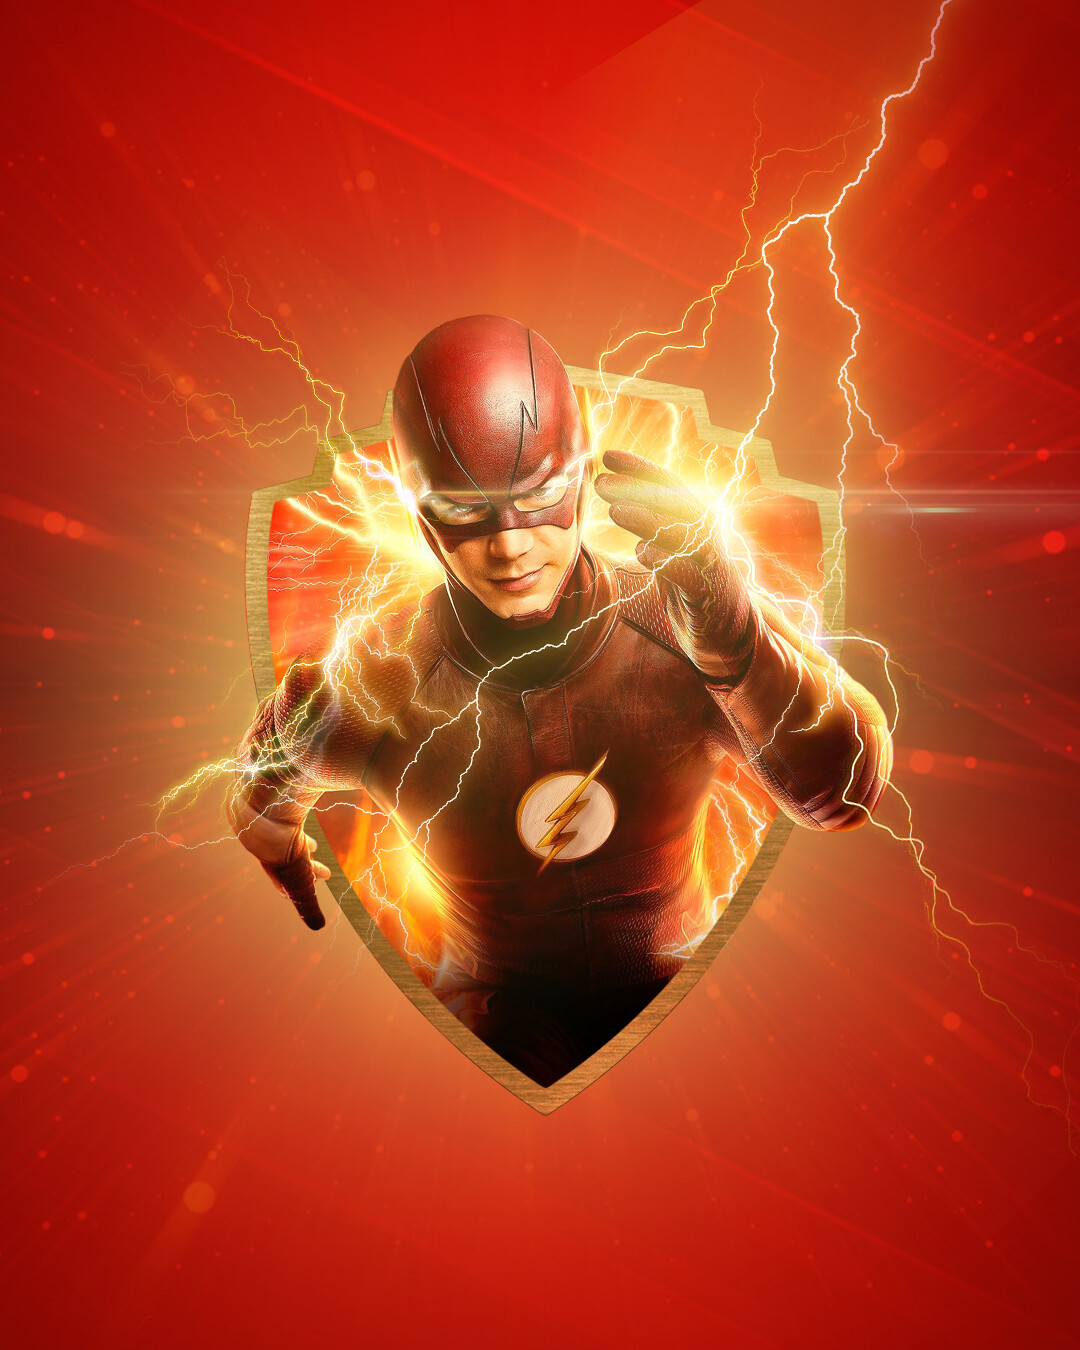 ArtStation - The Flash x Warner Bros Branding